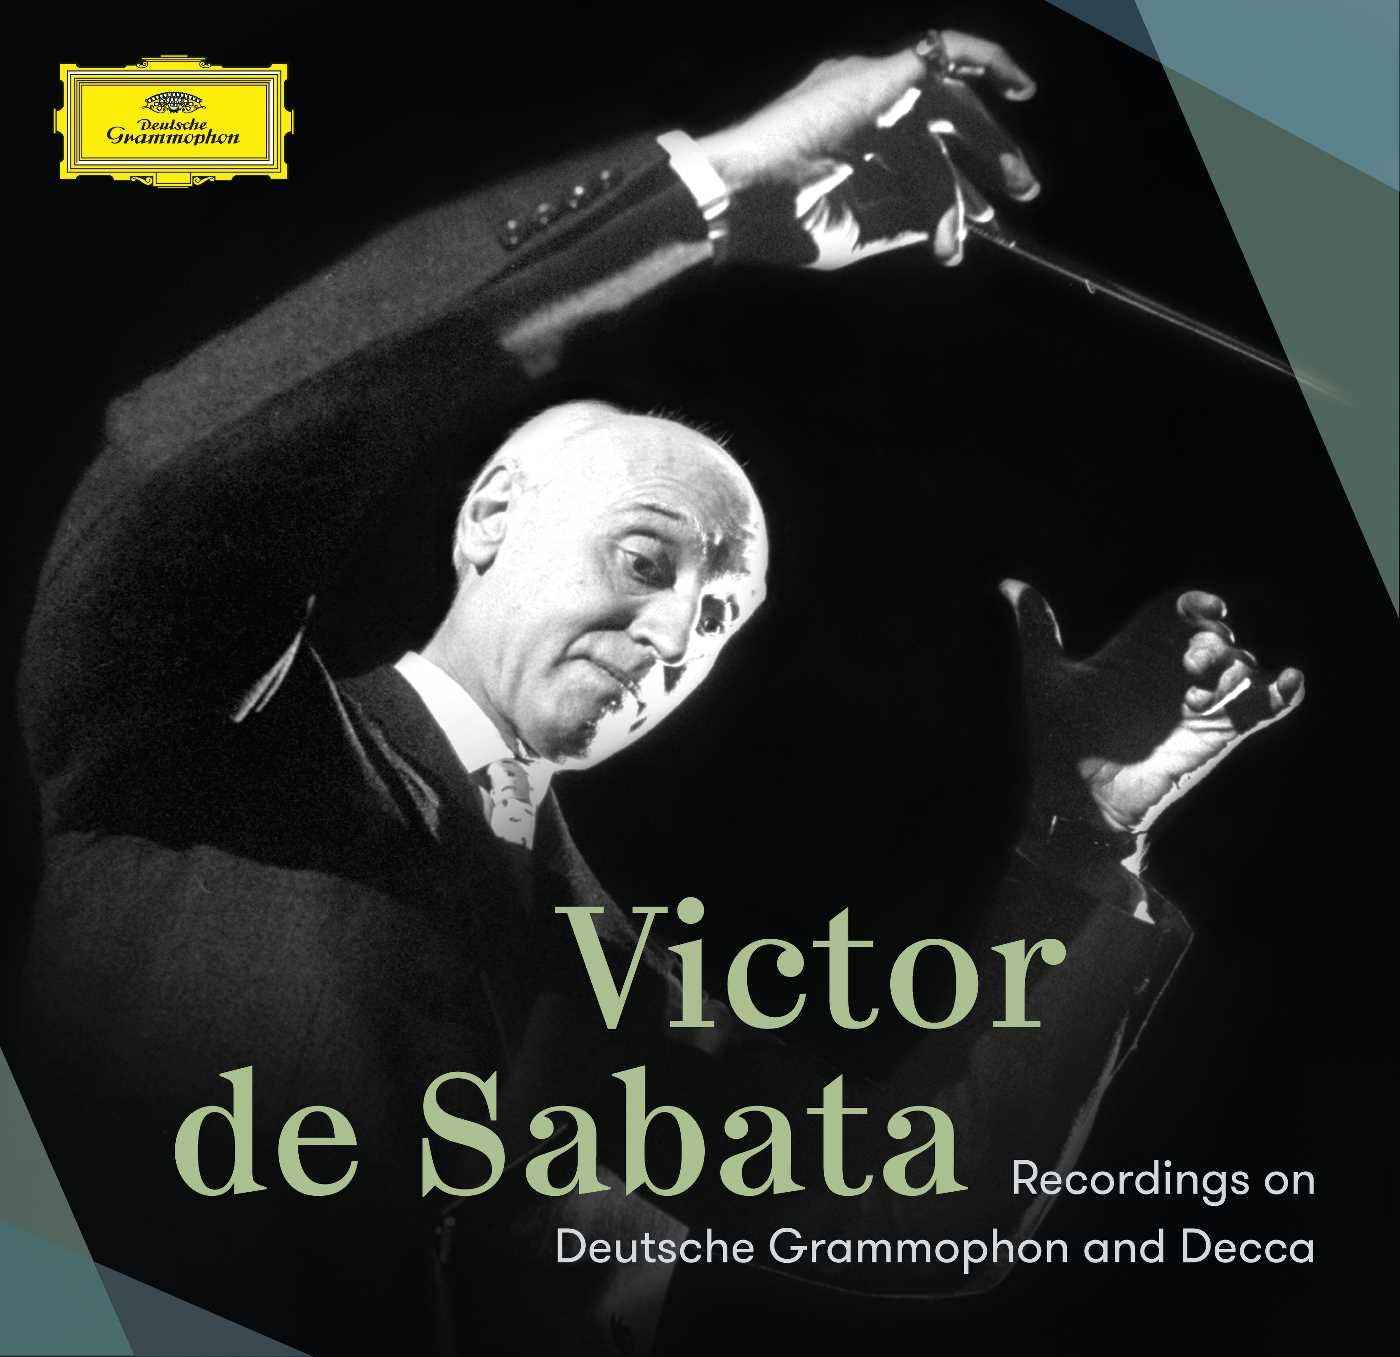 Victor de Sabata recordings on Deutsche Grammophon and Decca | Victor Sabata